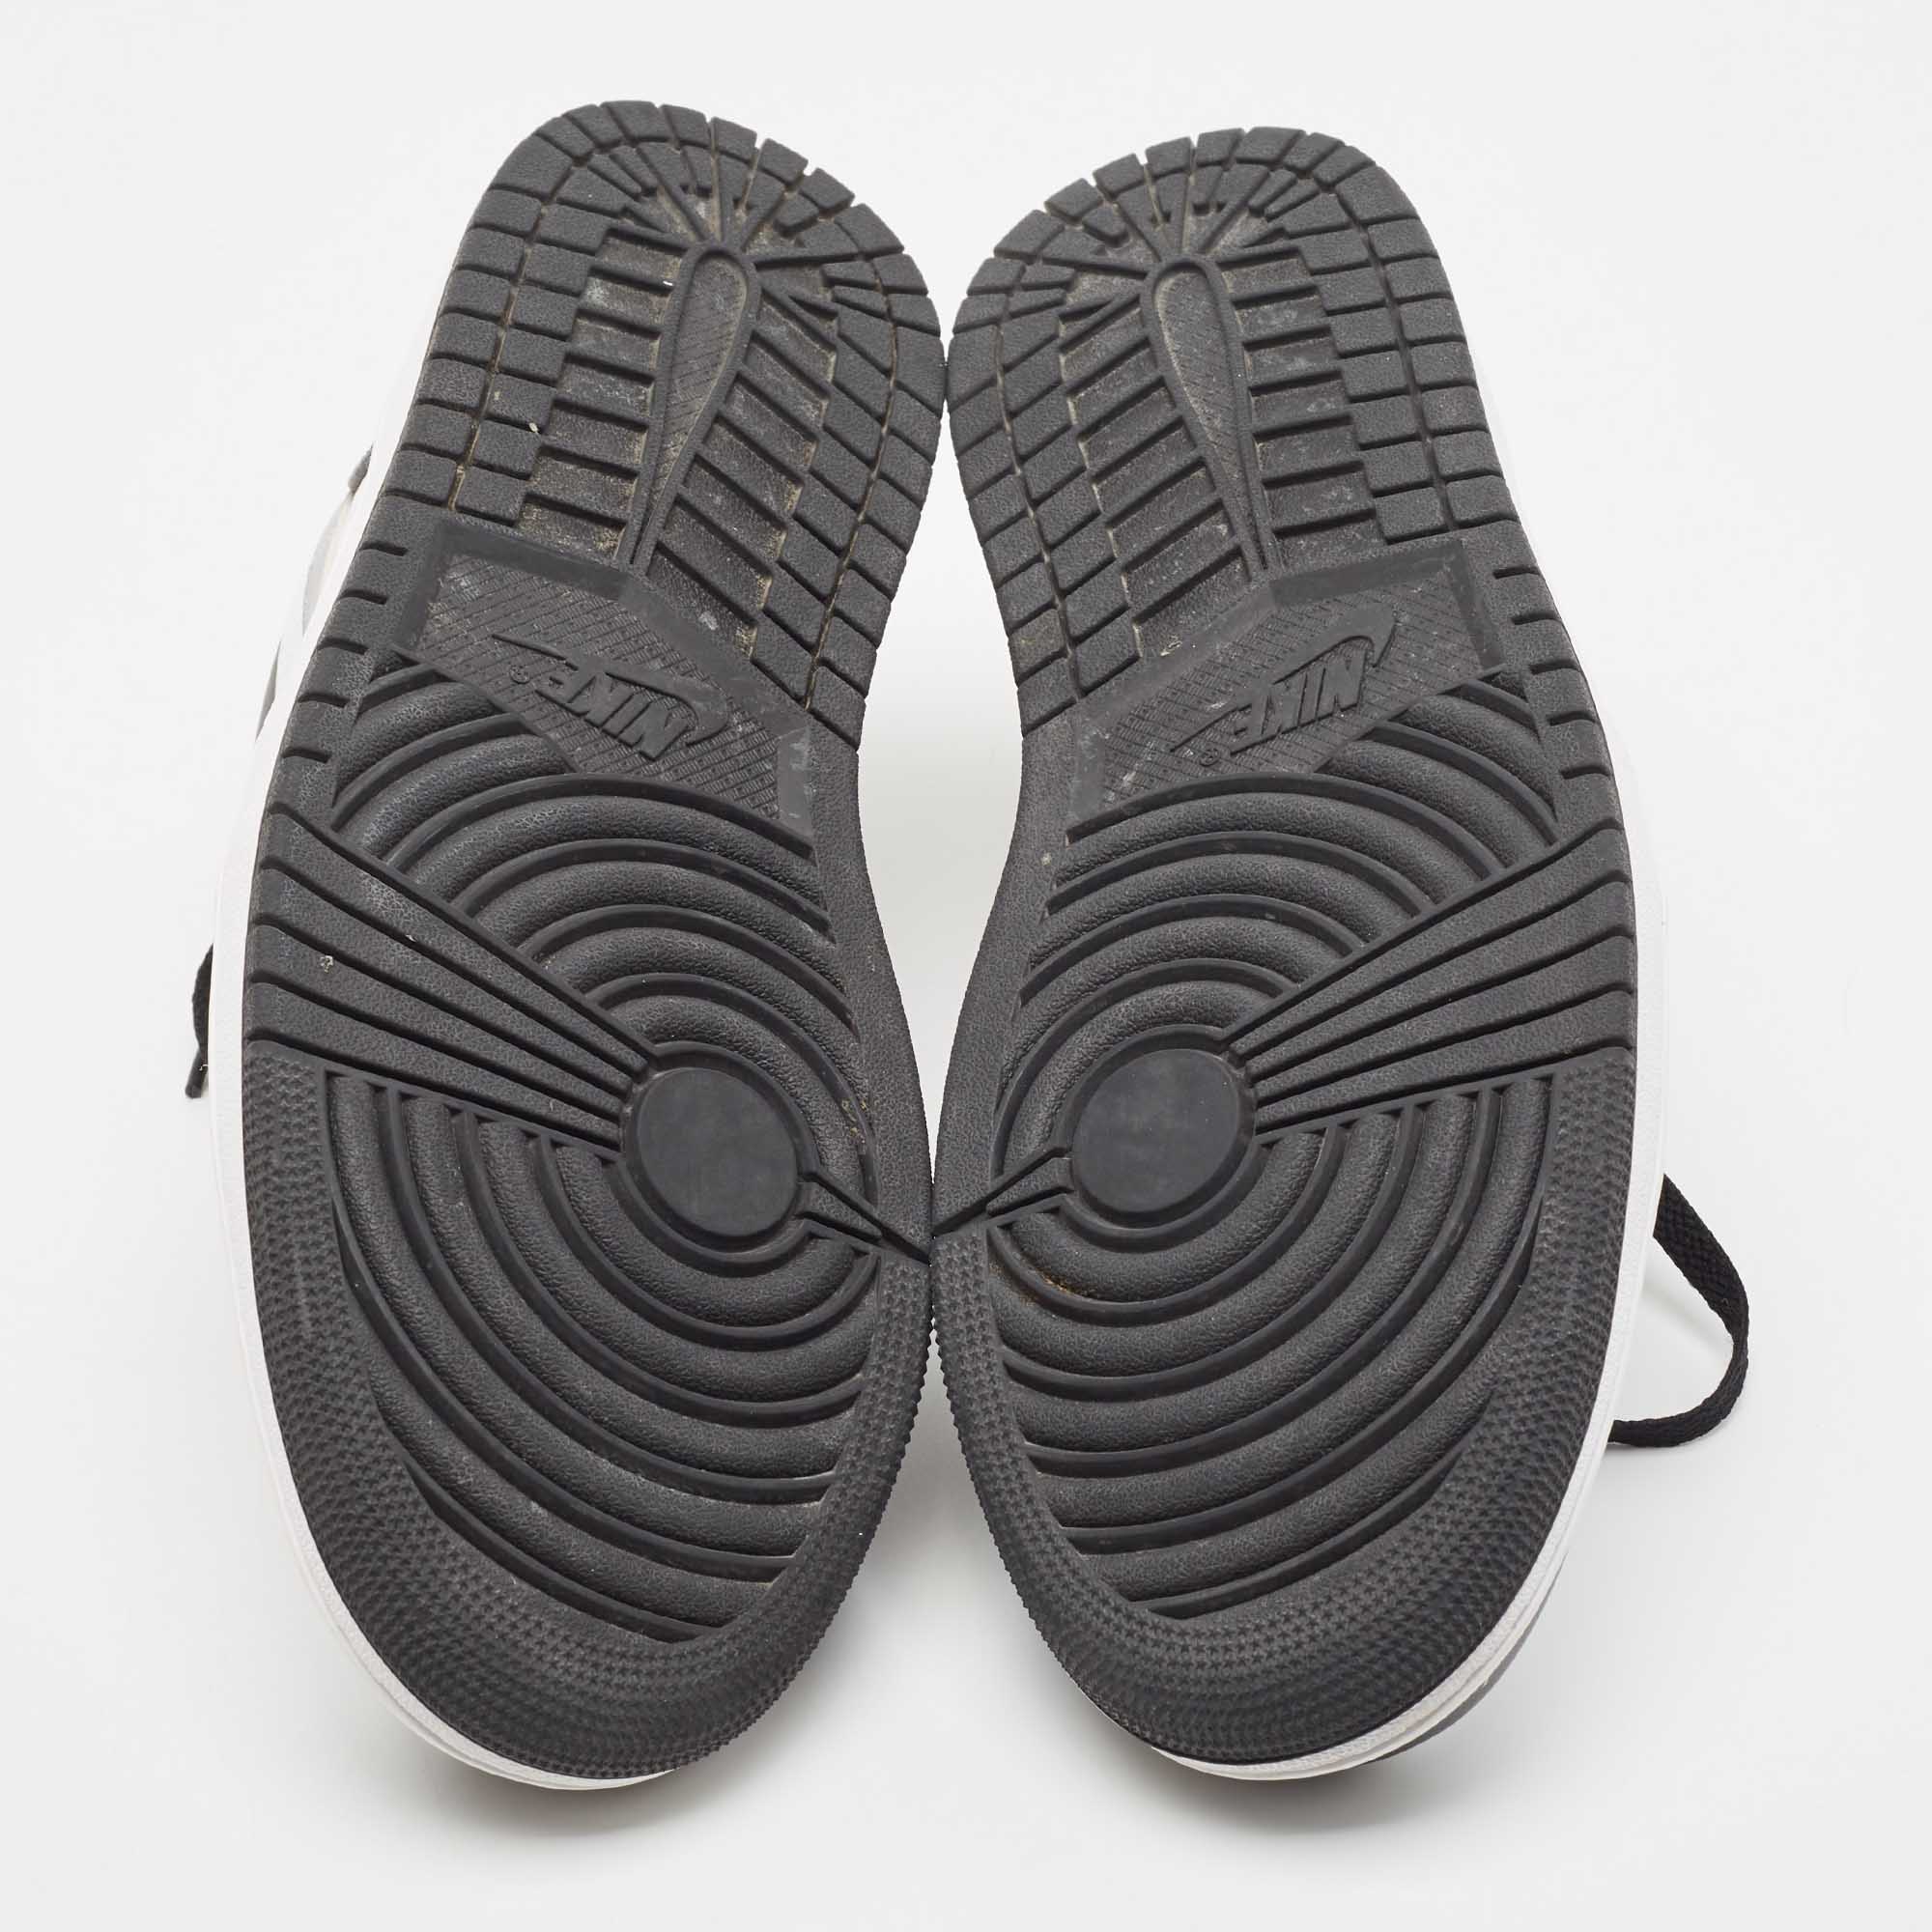 Air Jordans Multicolor Leather Jordan 1 Low Black -Grey Sneakers Size 44